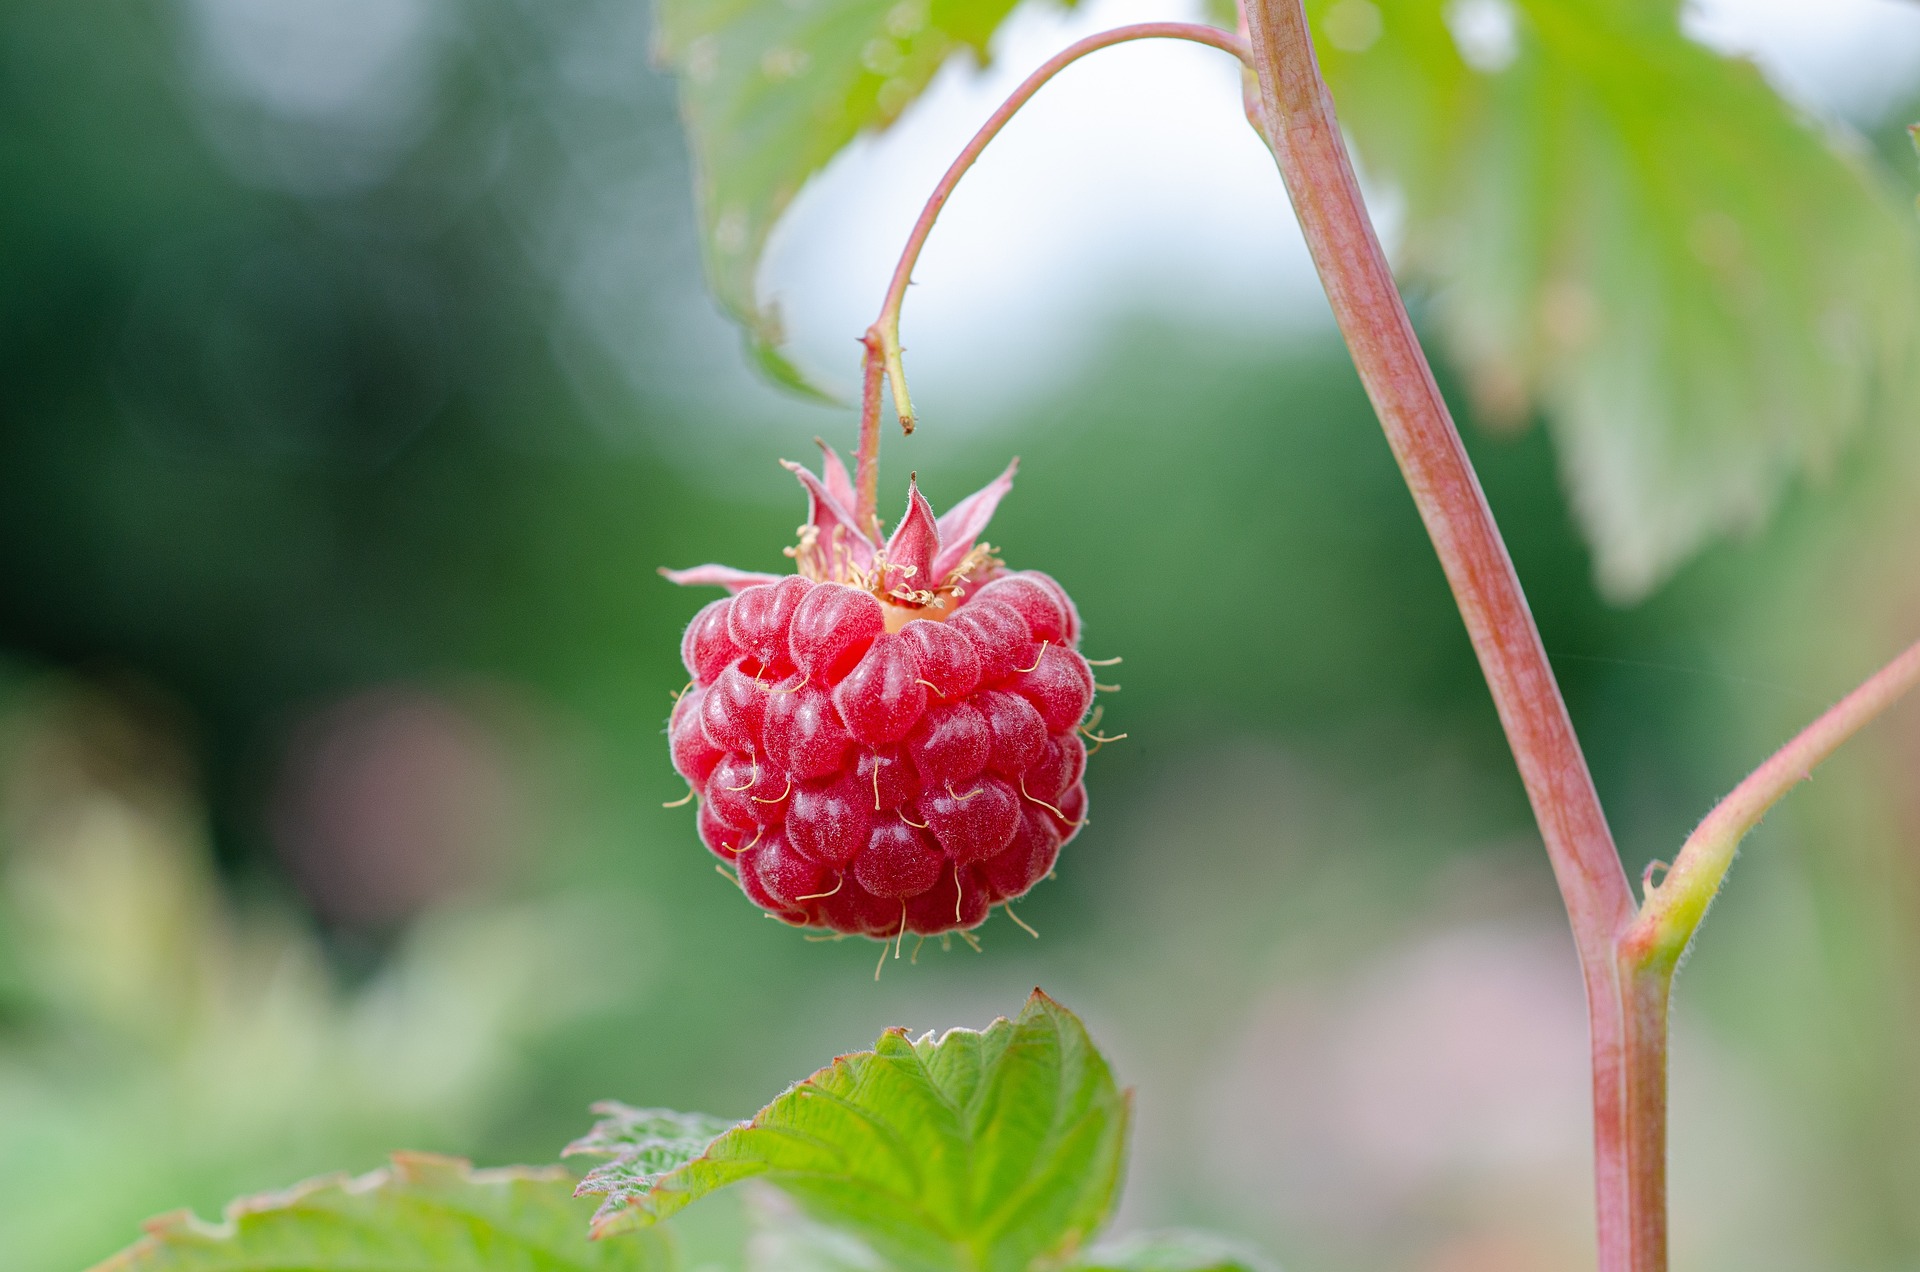 Raspberry in a garden.